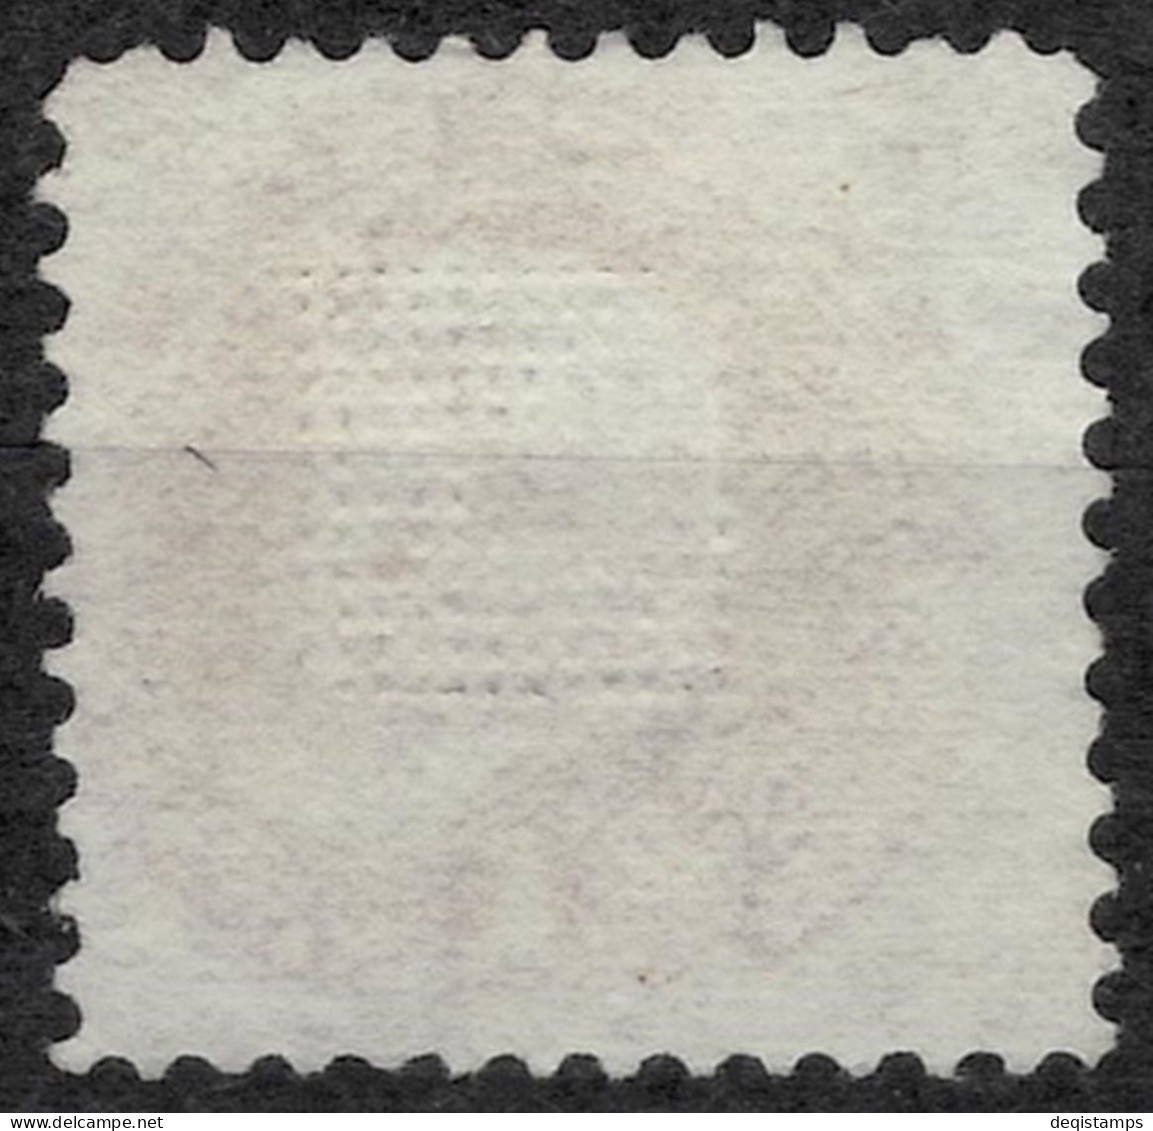 USA 1890/93 1c  Benjamin Franklin - Grill About 9½ X 9mm  MNG Stamp - Ongebruikt